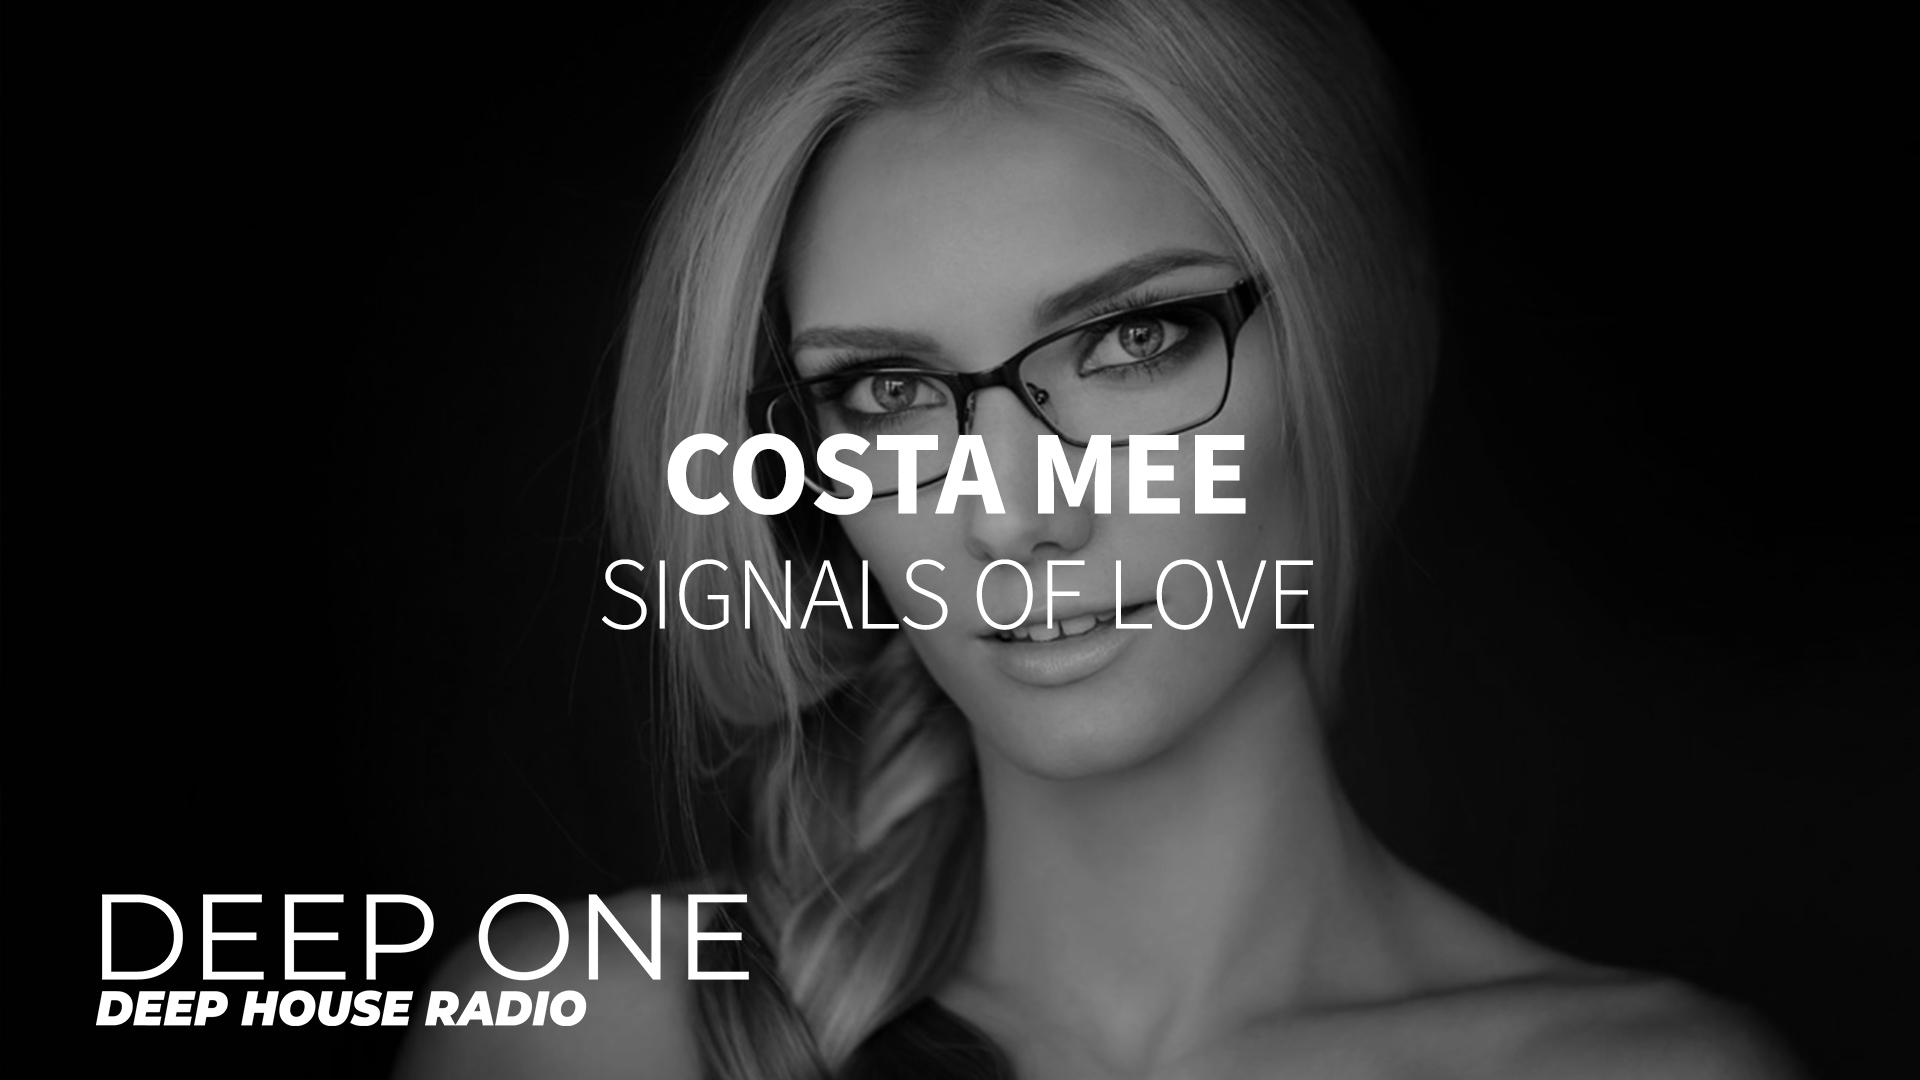 Costa музыка. Costa mee исполнительница. Радио Deep one. "Costa mee" && ( исполнитель | группа | музыка | Music | Band | artist ) && (фото | photo). Costa mee loving you.